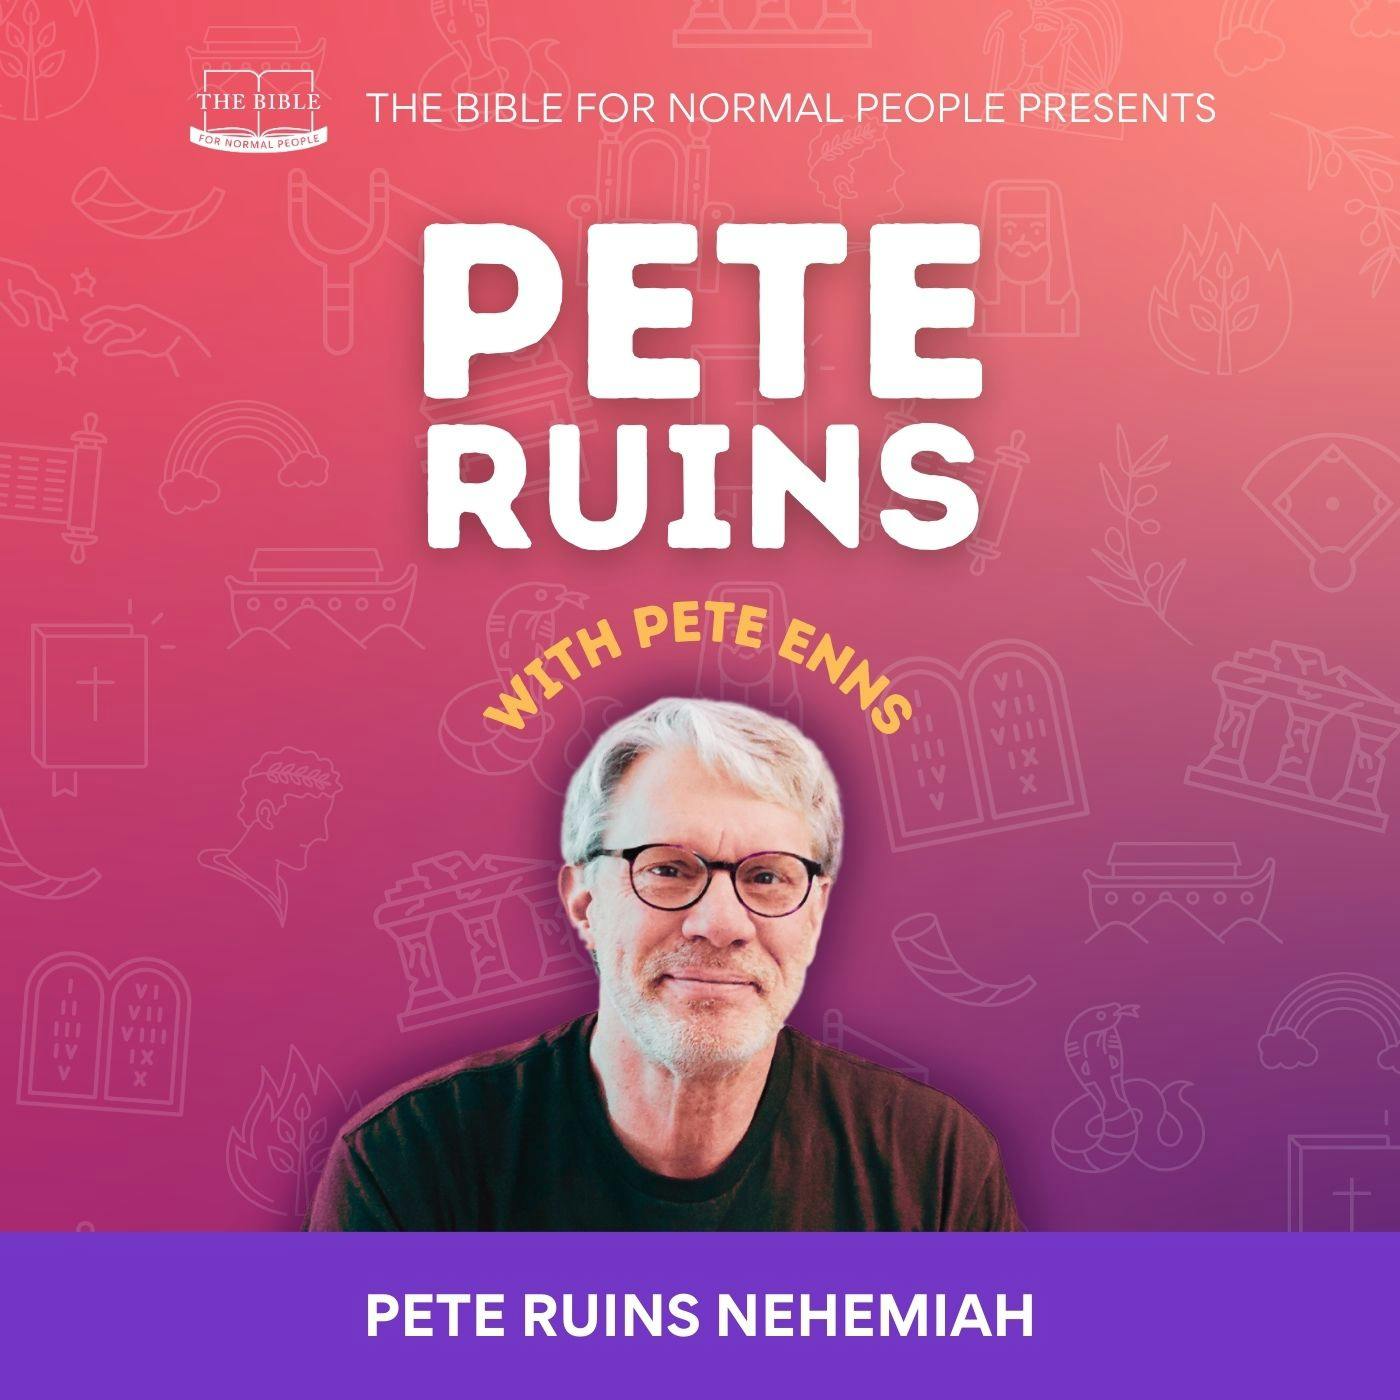 [Bible] Episode 274: Pete Enns - Pete Ruins Nehemiah